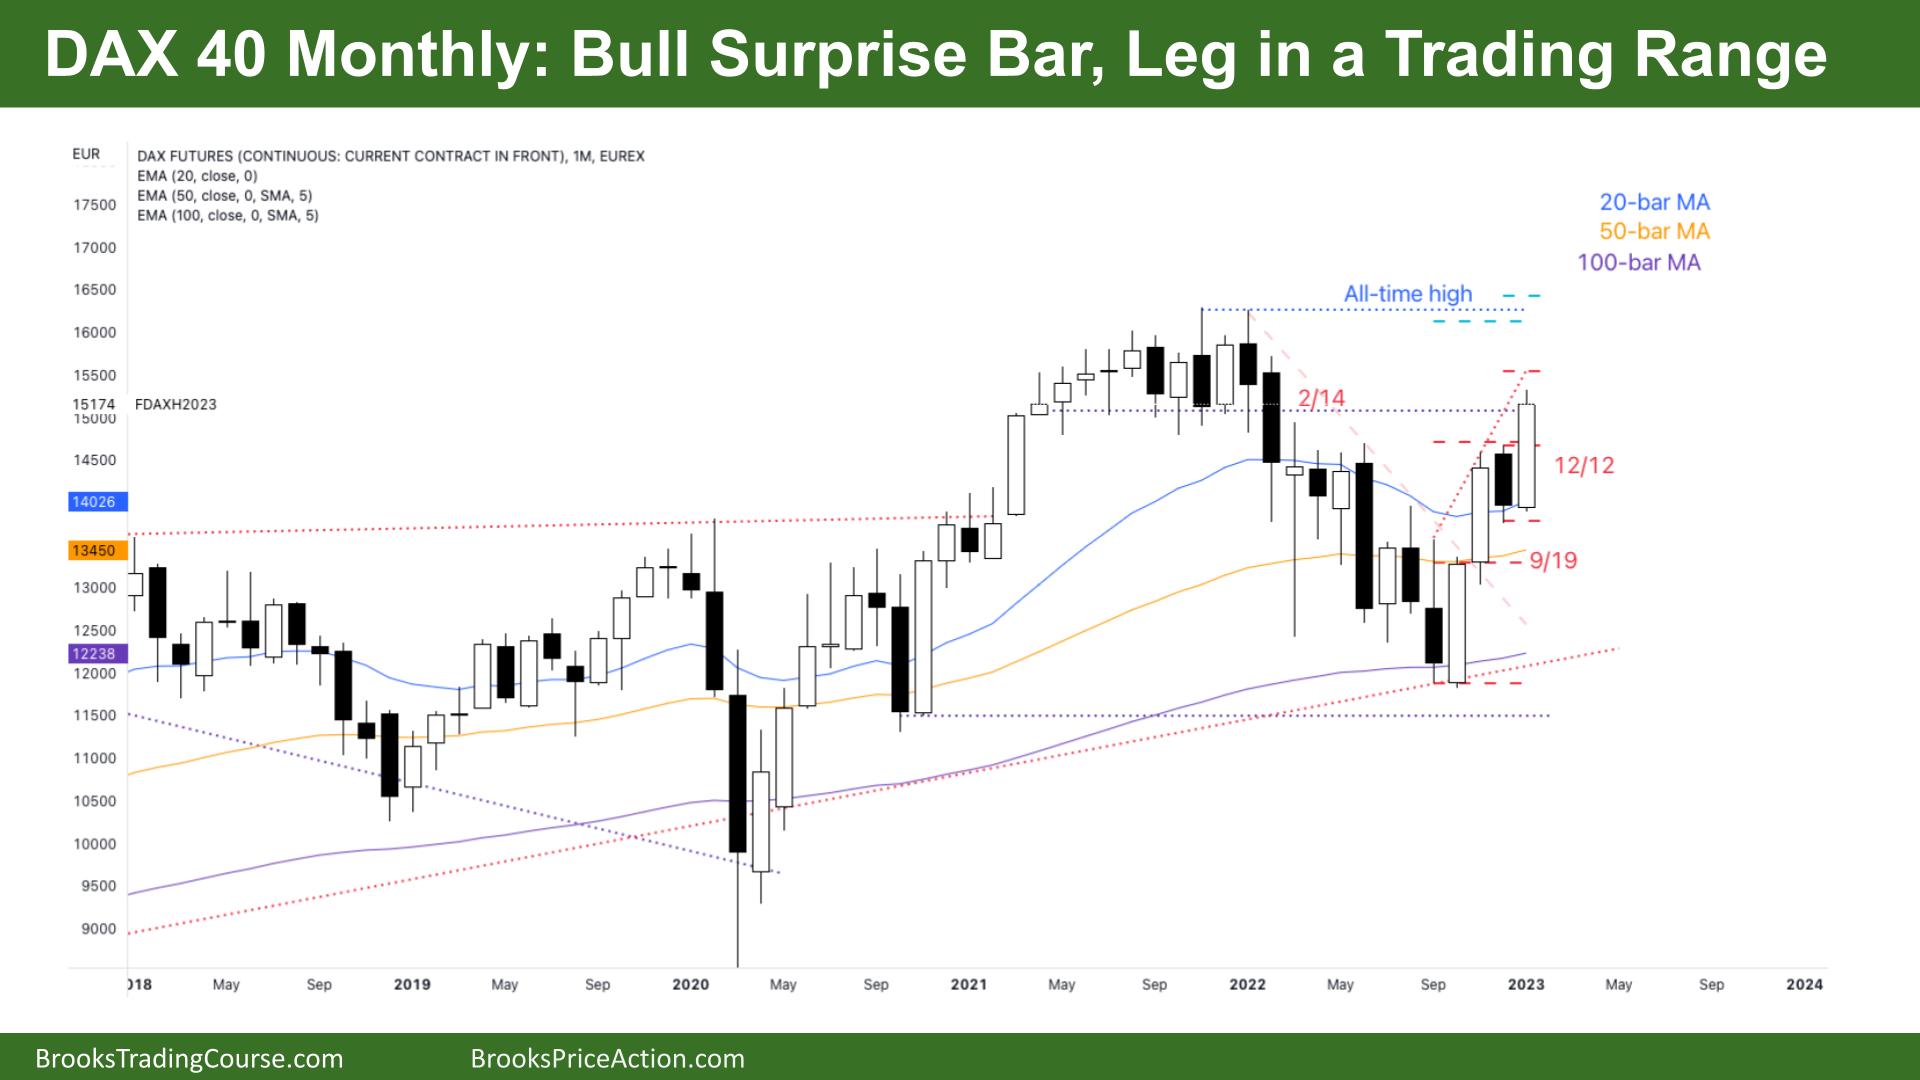 DAX 40 Big Bull Surprise Bar, Leg in a Trading Range